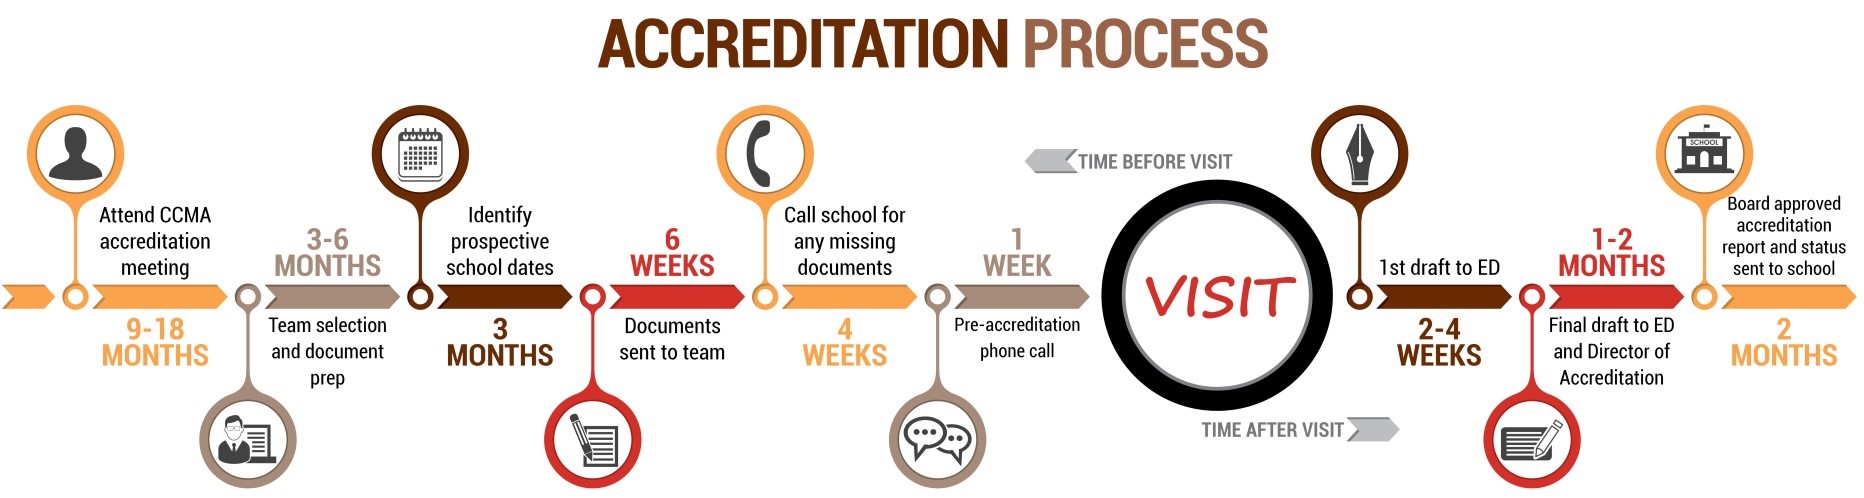 accreditation-process